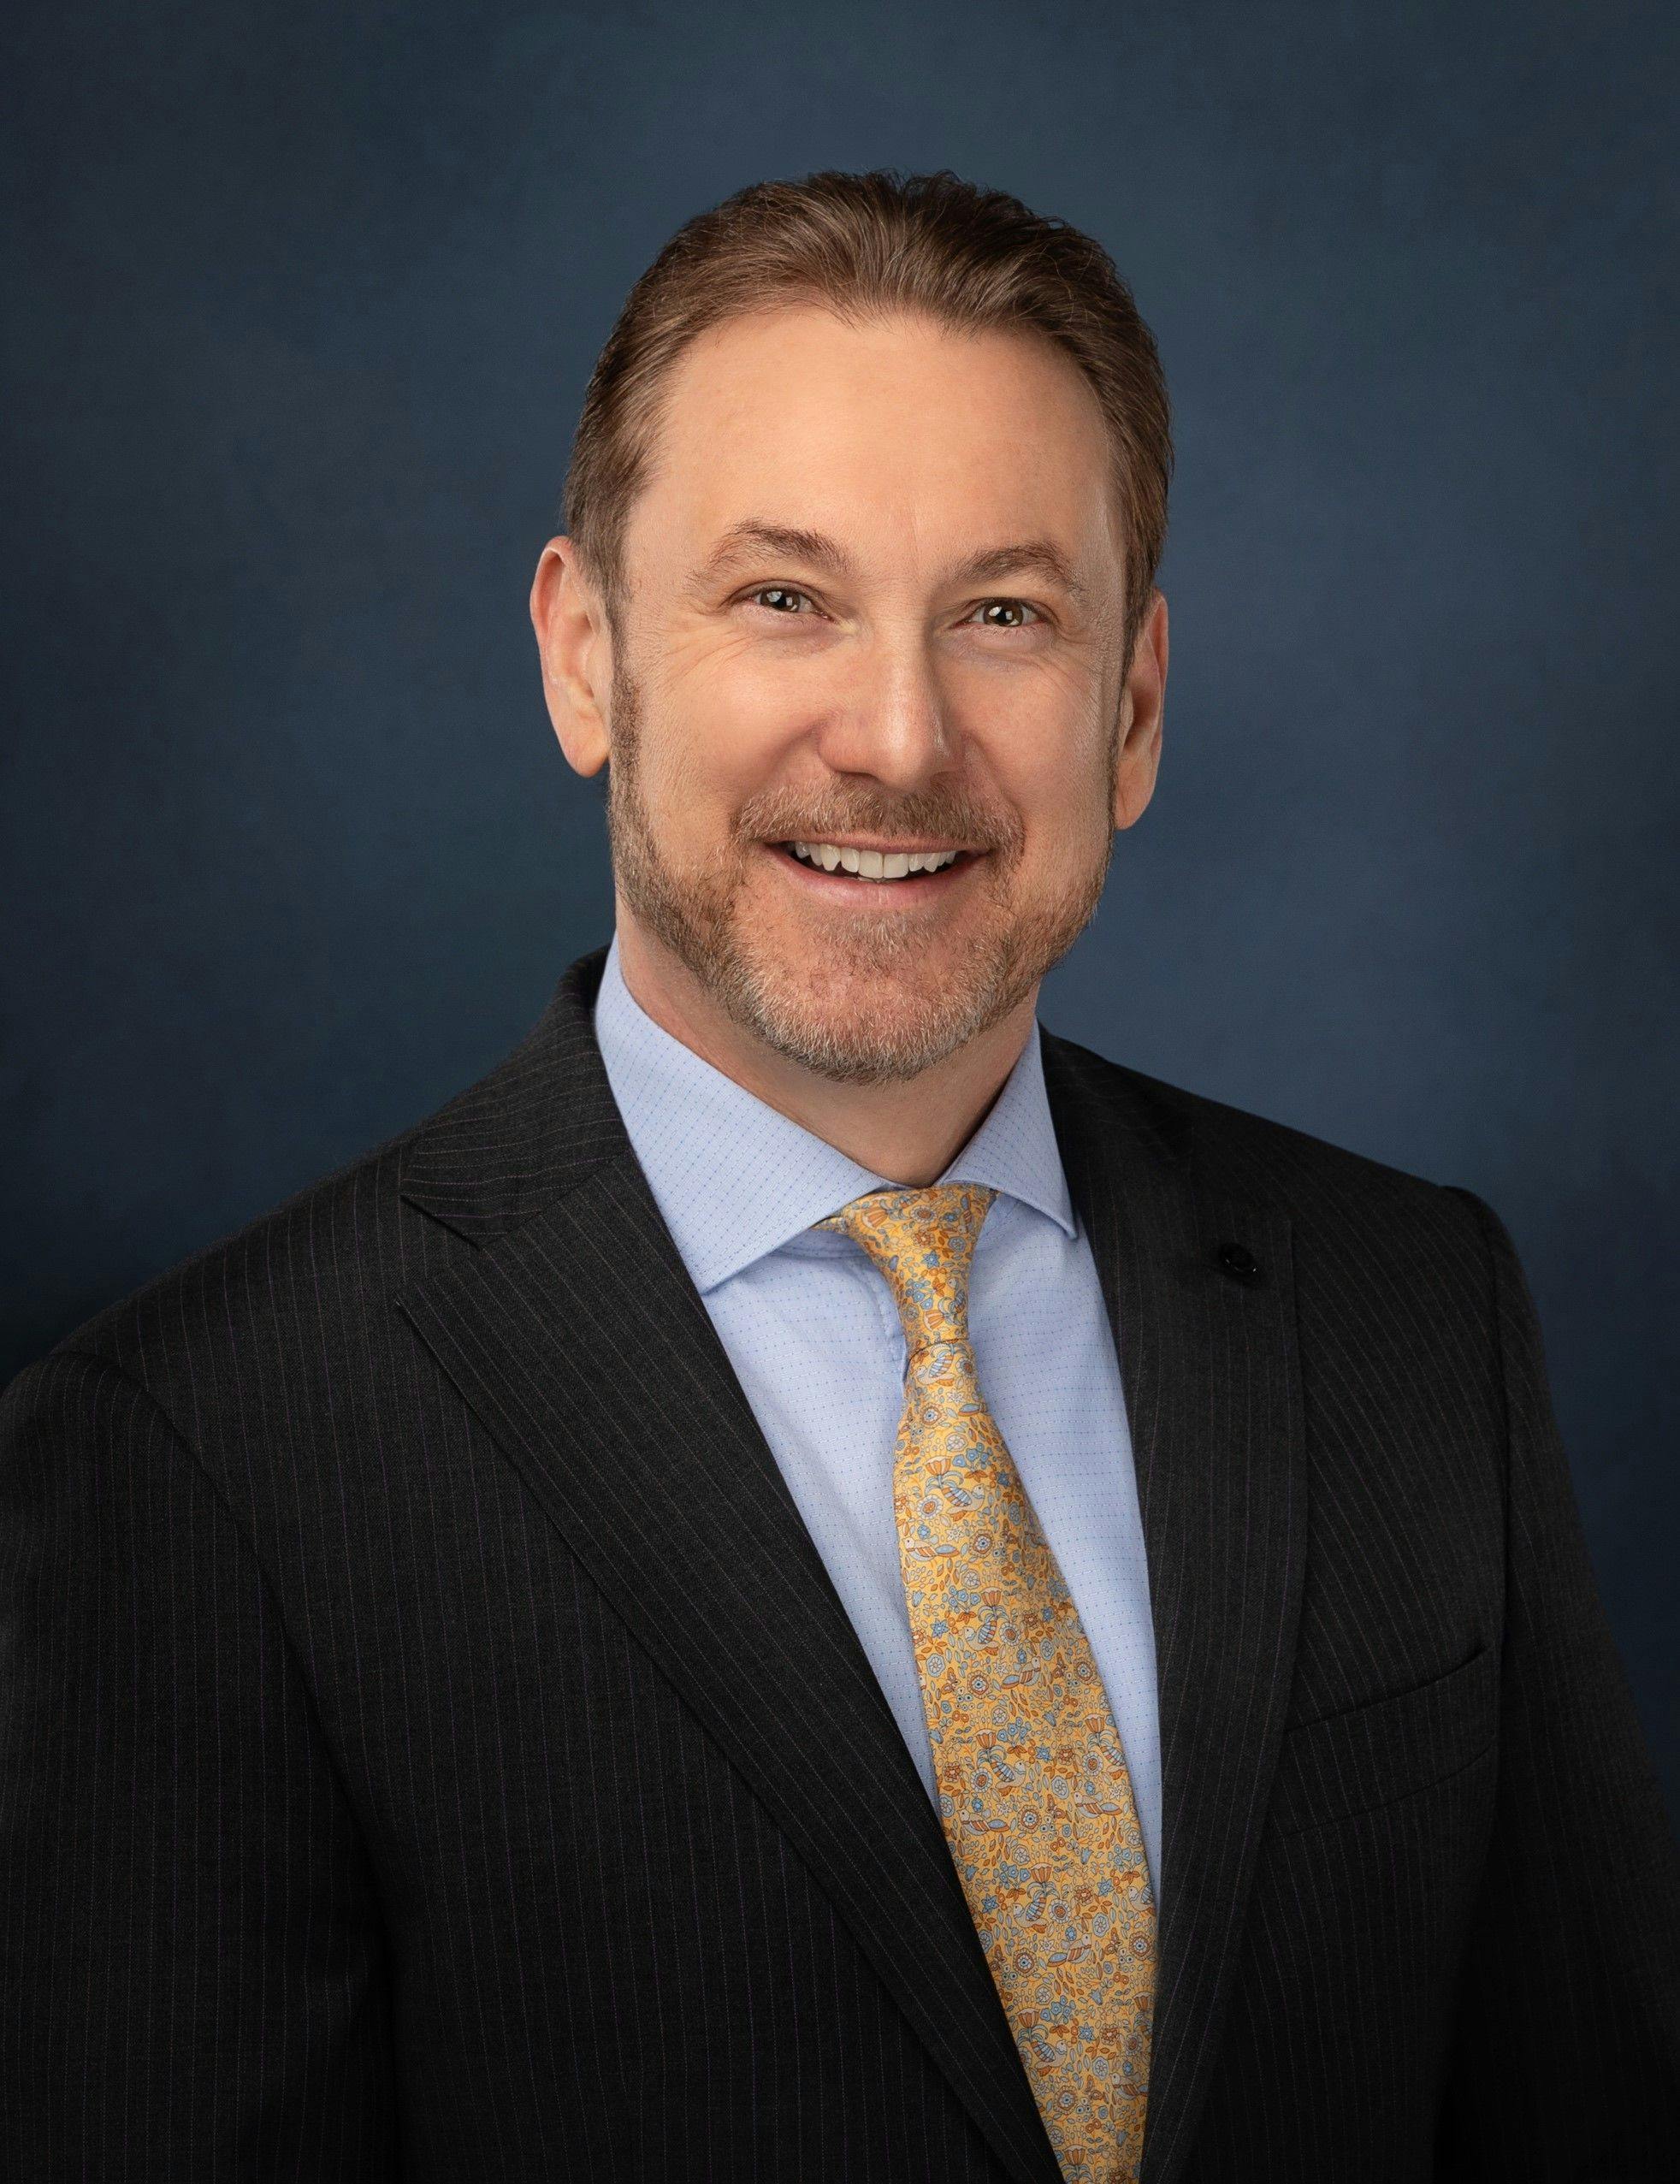 Matt Heywood, president and CEO of Aspirus Health. (Image: Aspirus)